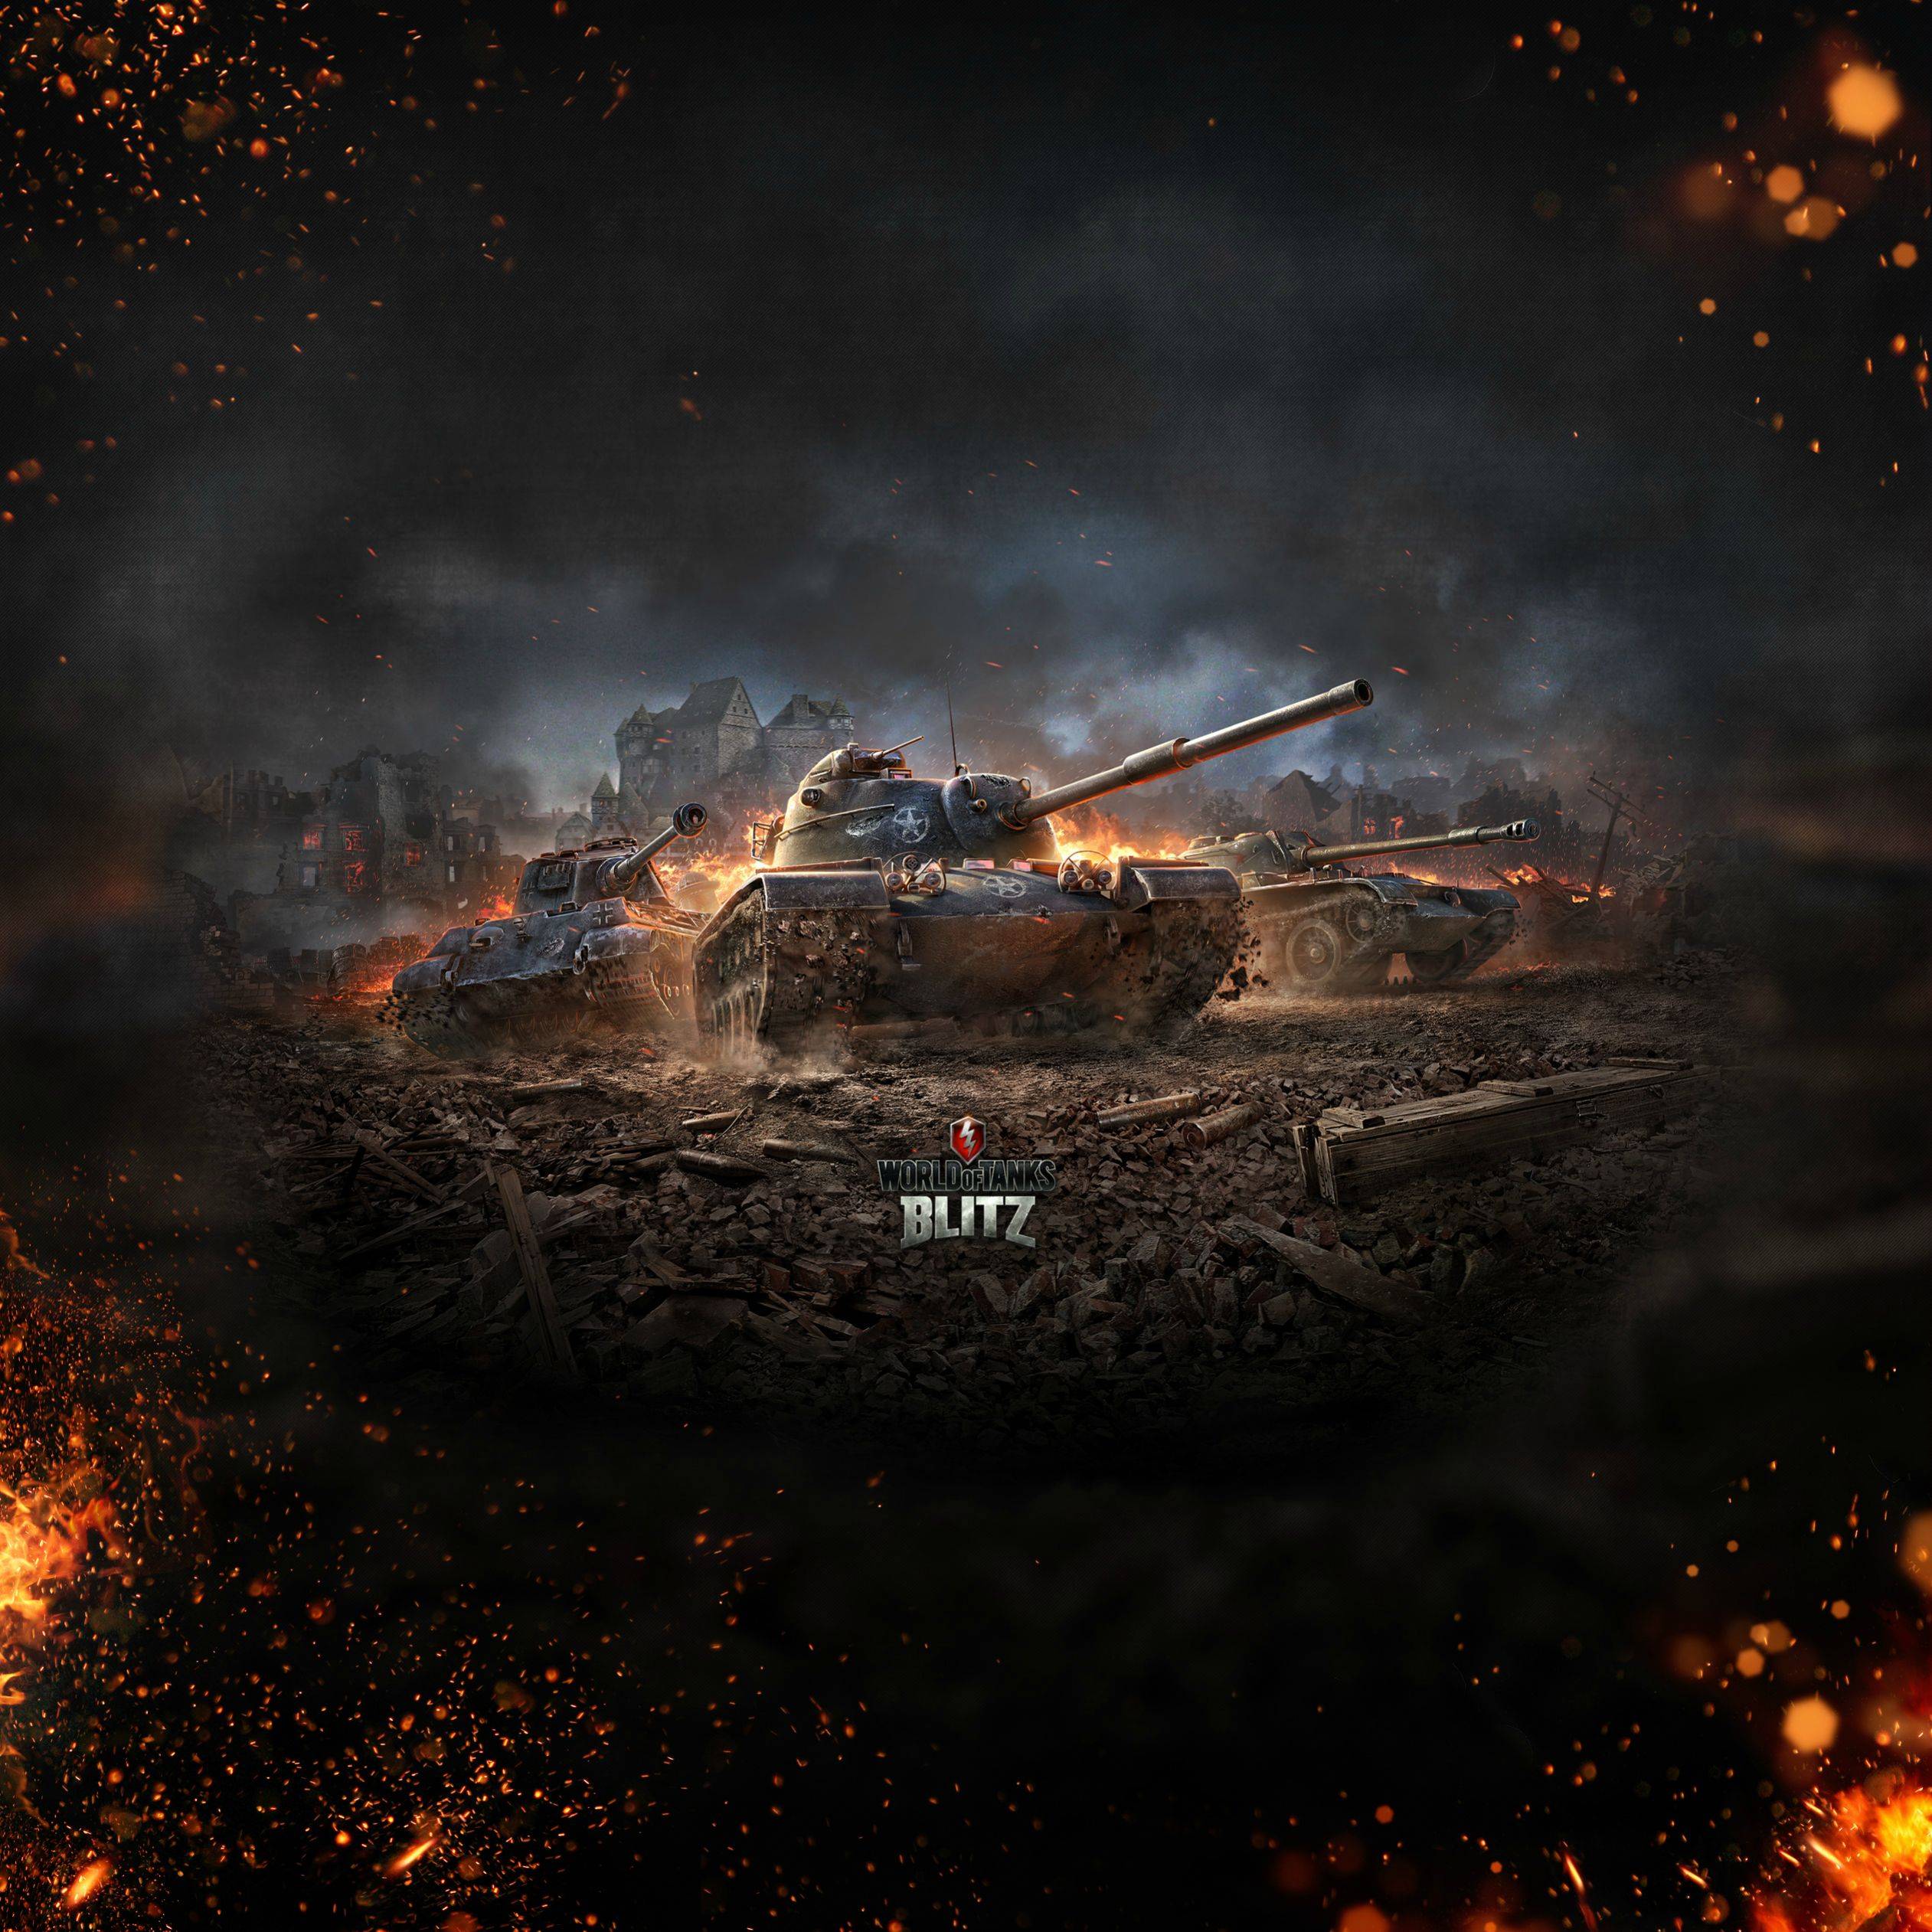 World of Tanks Blitz: Wallpaper for iPad and iPad mini